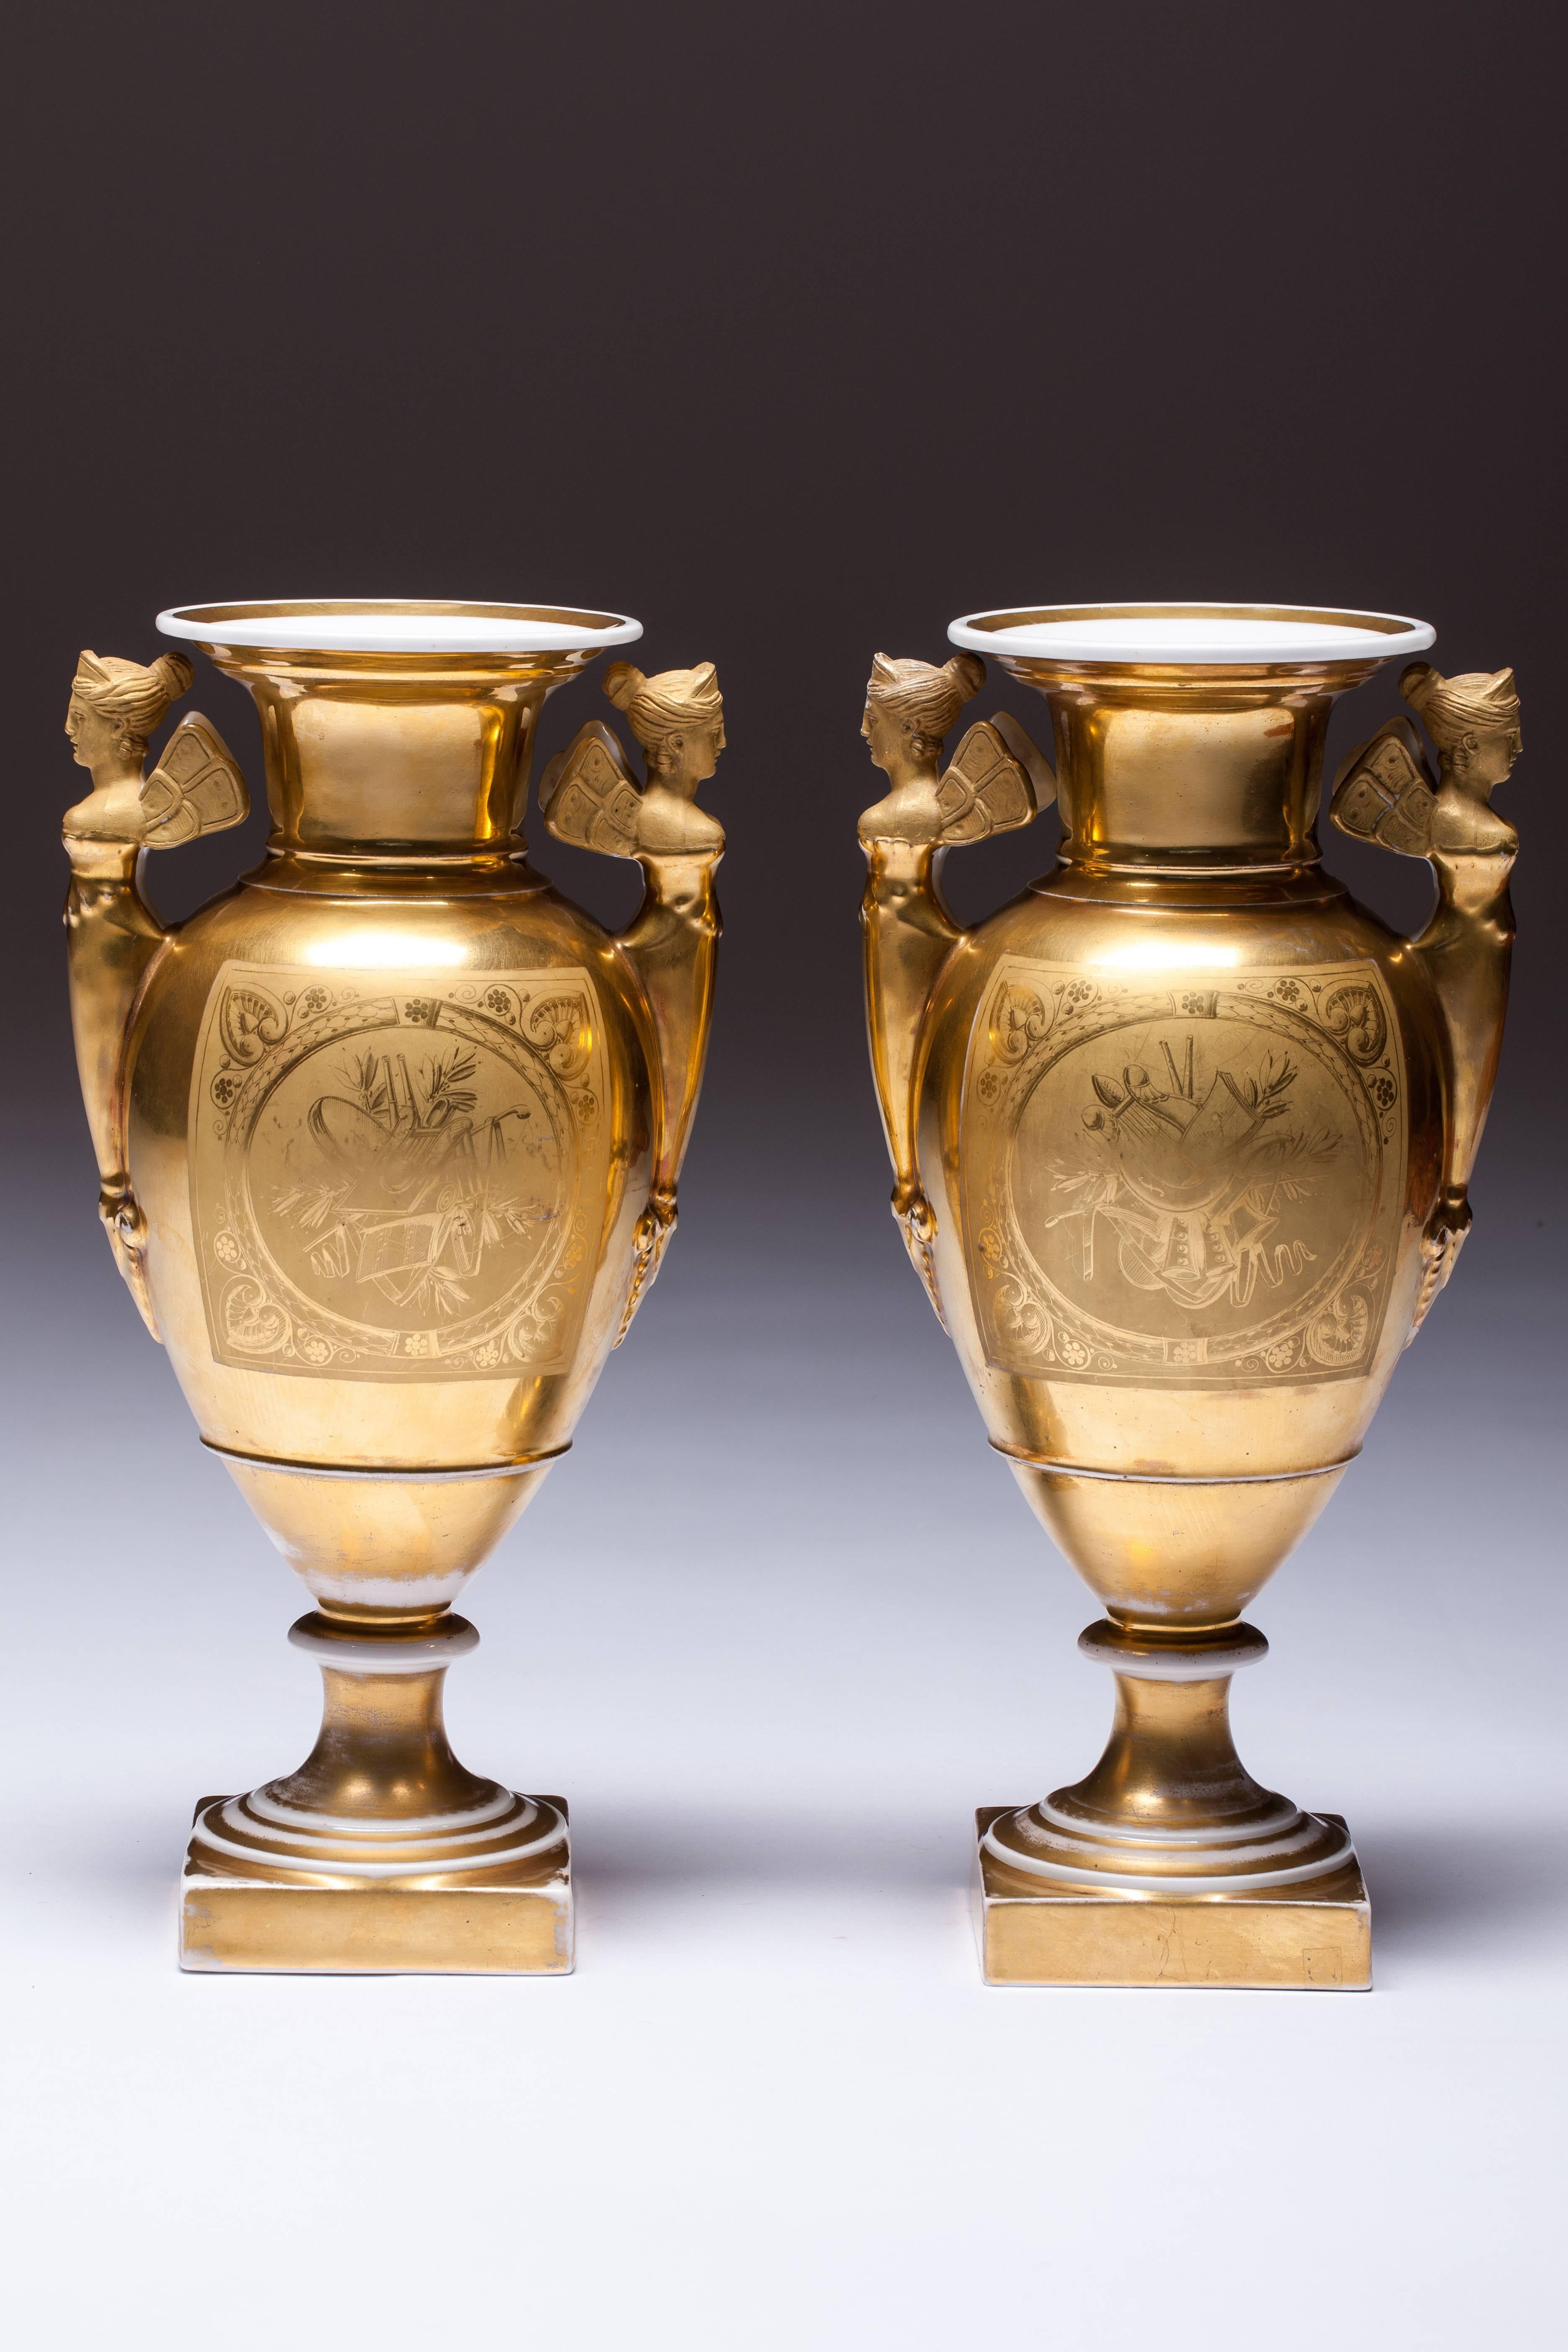 Pair of Empire Period Porcelain Vases 19th Century For Sale 4